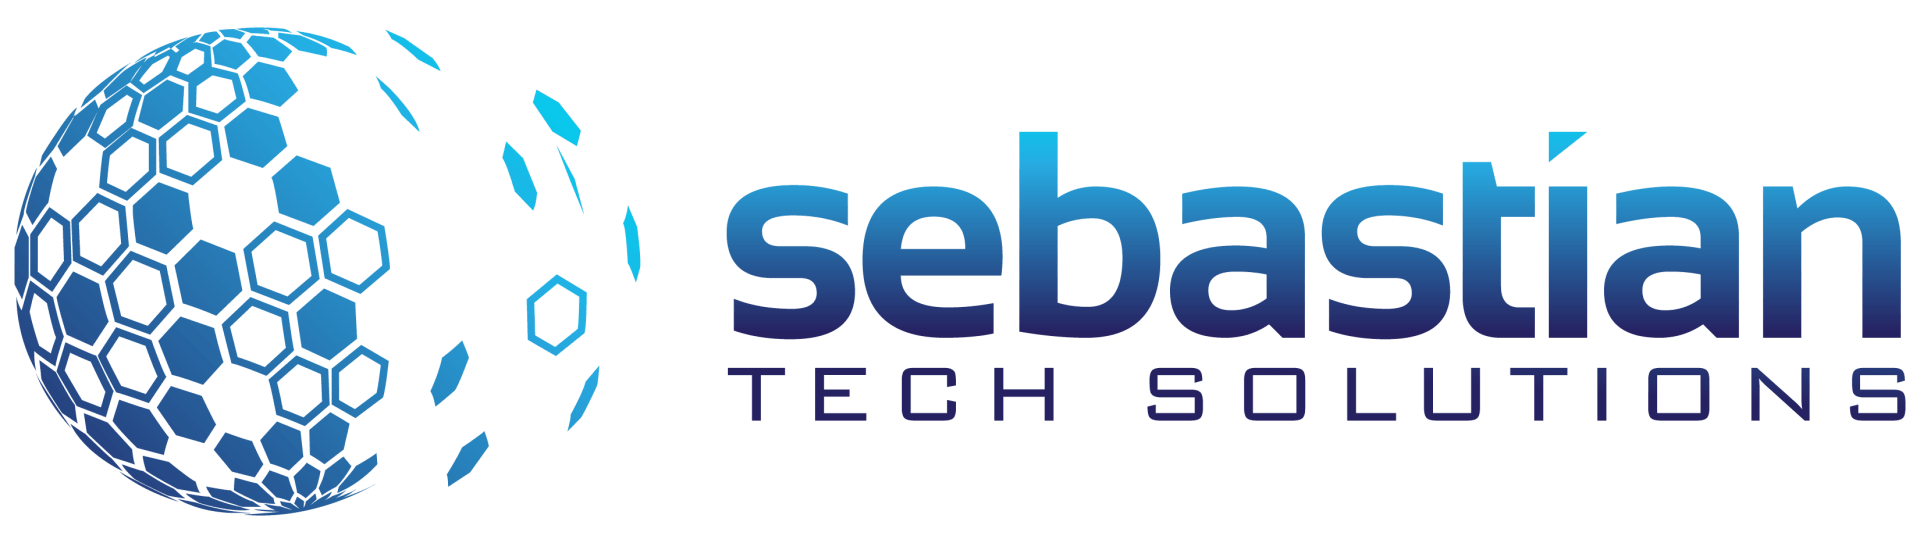 Sebastian Tech Solutions Logo: A ball of blue hexagons slowly disintegrating.